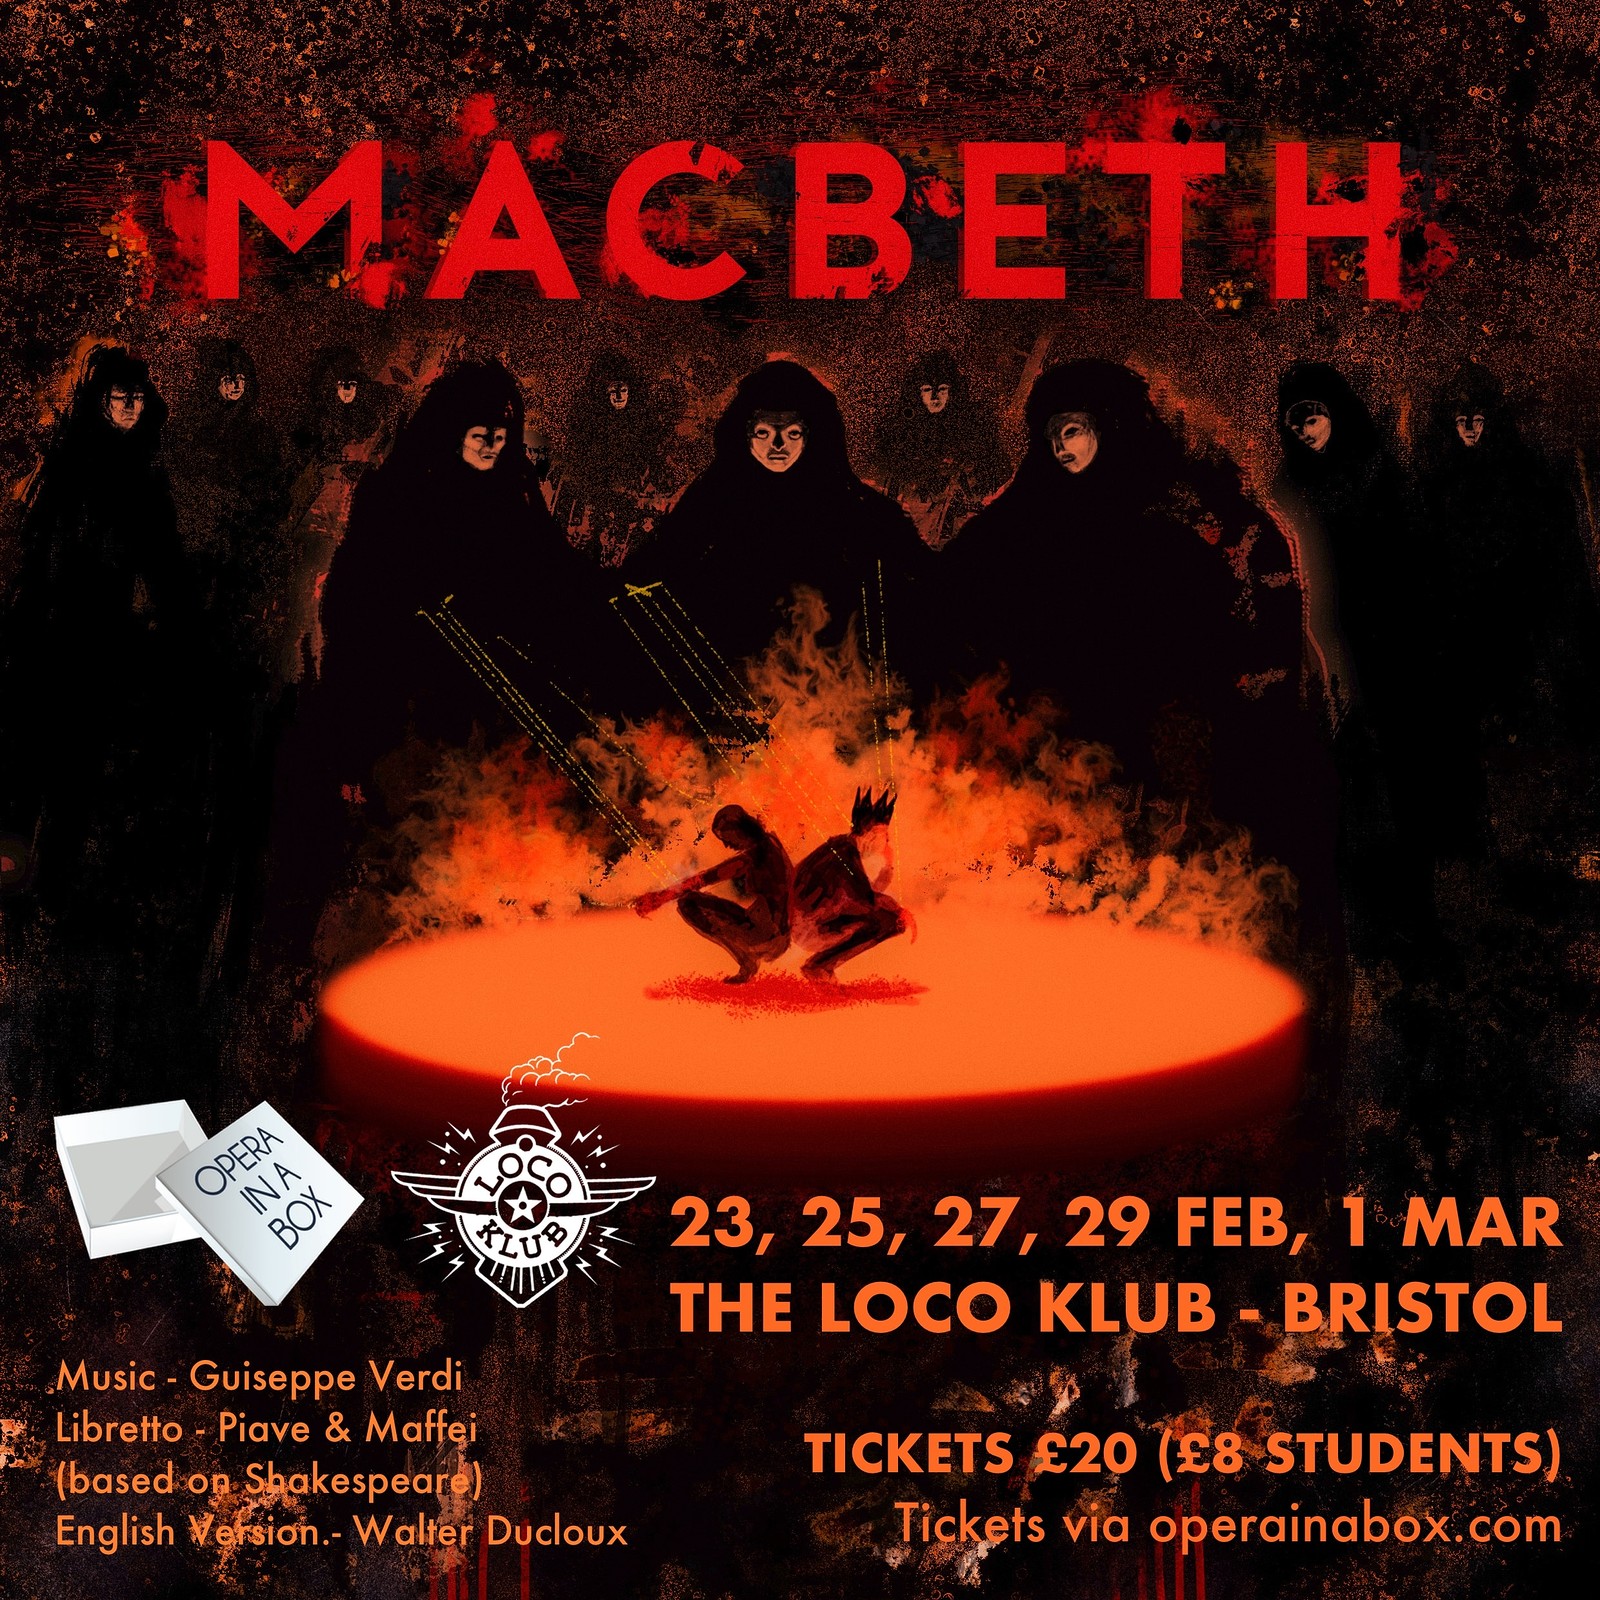 Macbeth at The Loco Klub